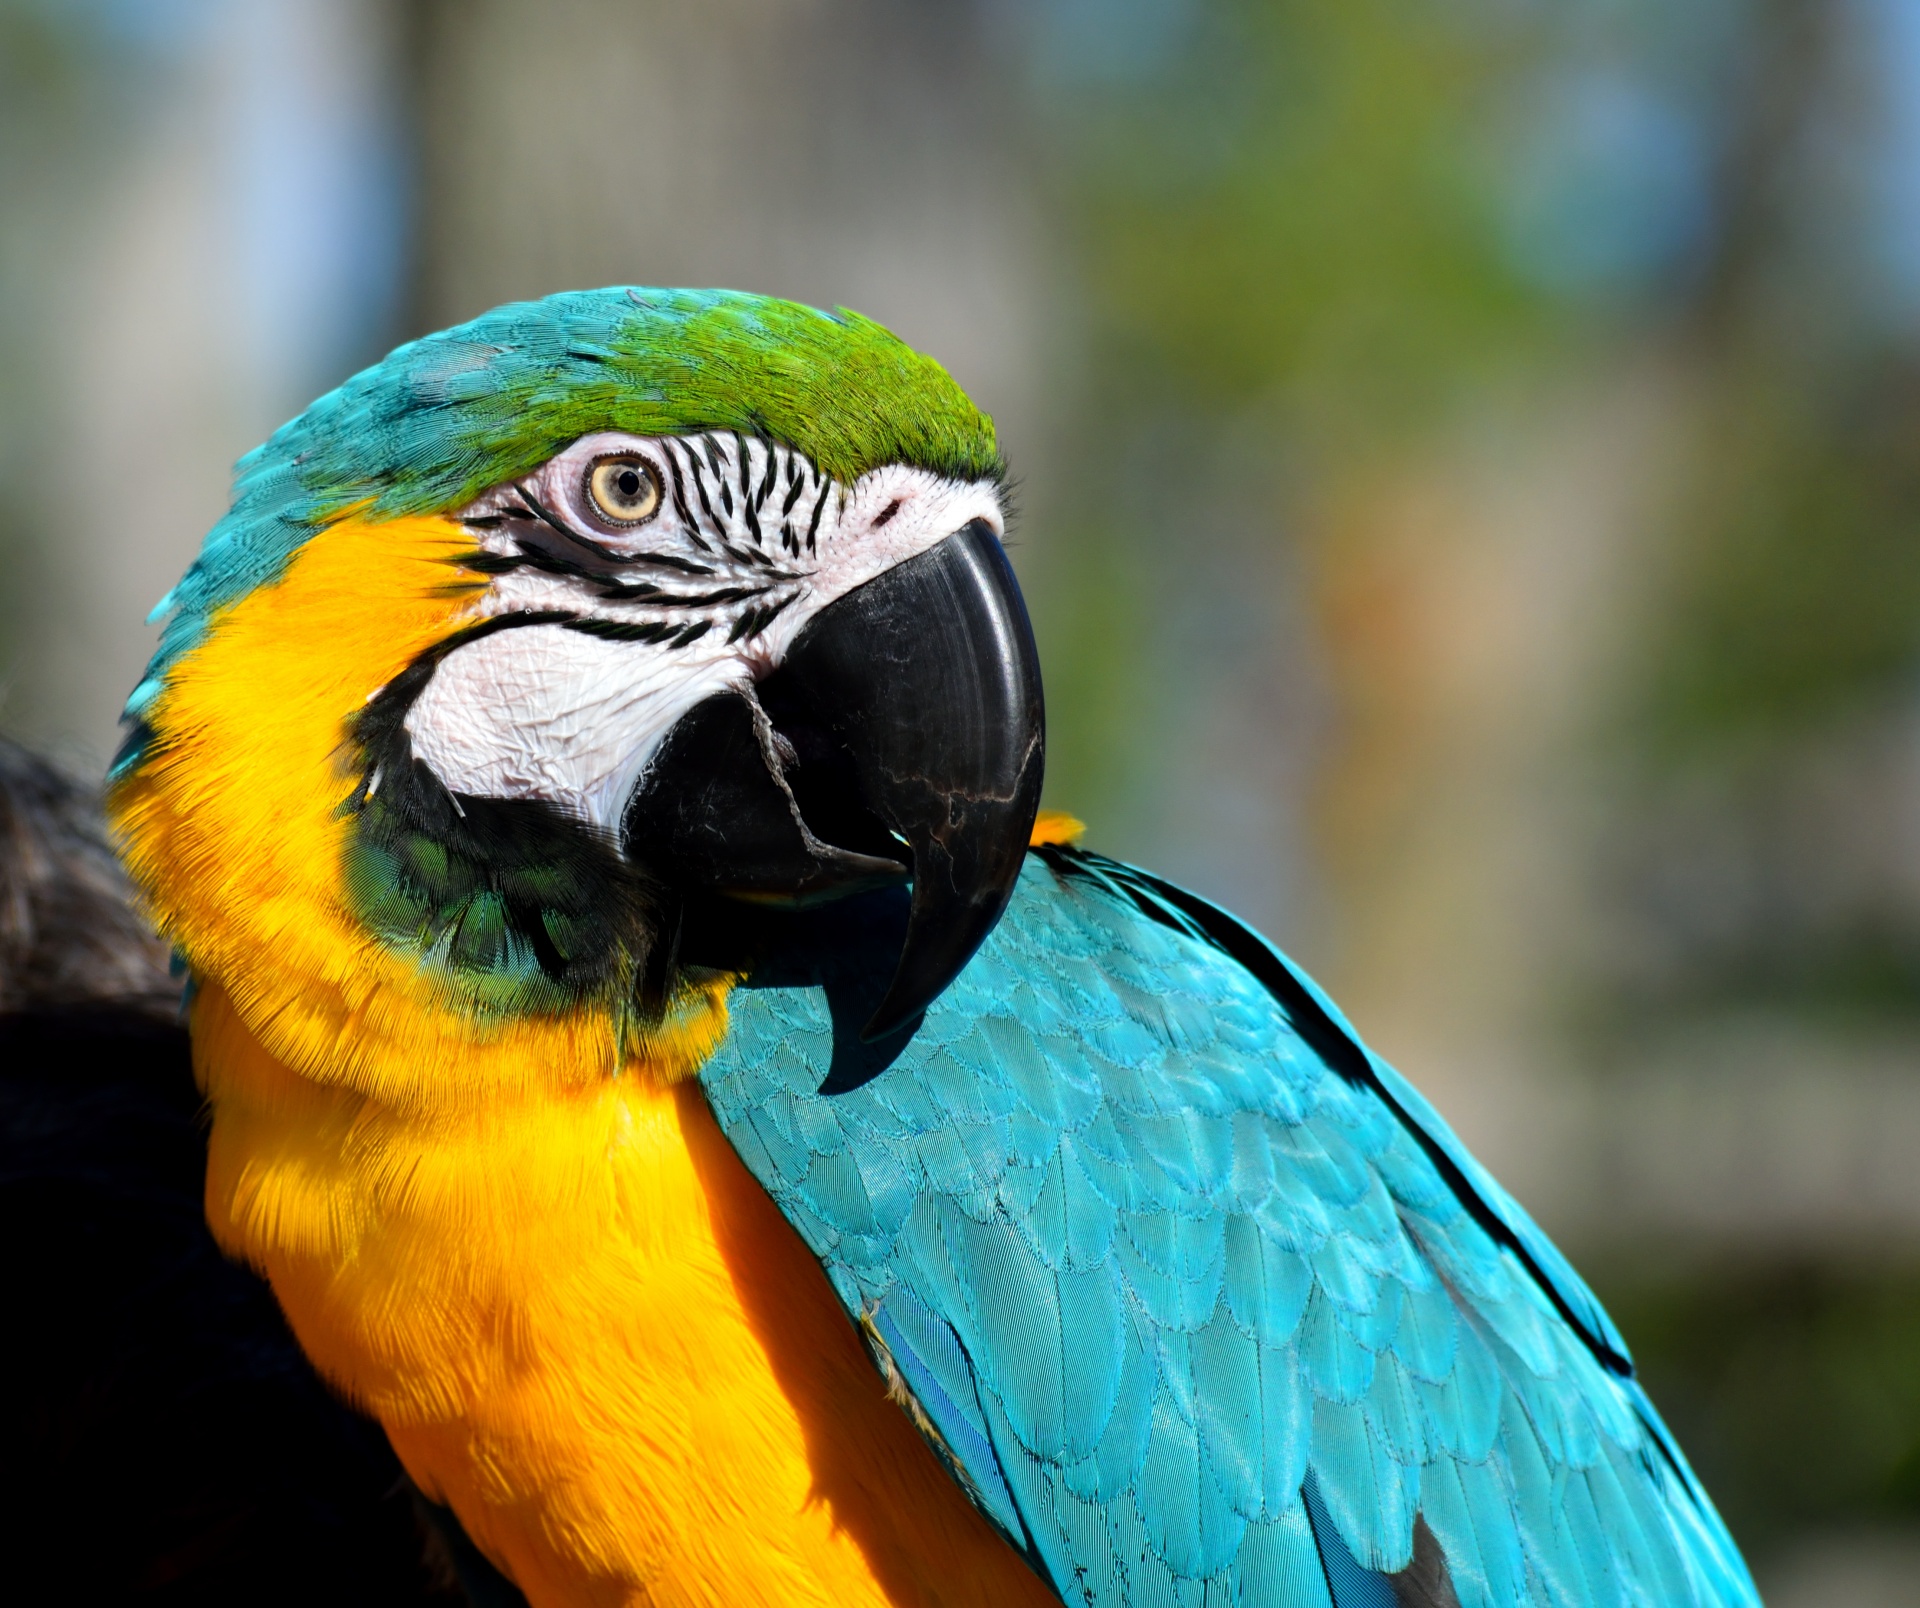 Macaw Parrot Bird Pet Vibrant Free Image From Needpix Com,Eggplant Recipes Roasted